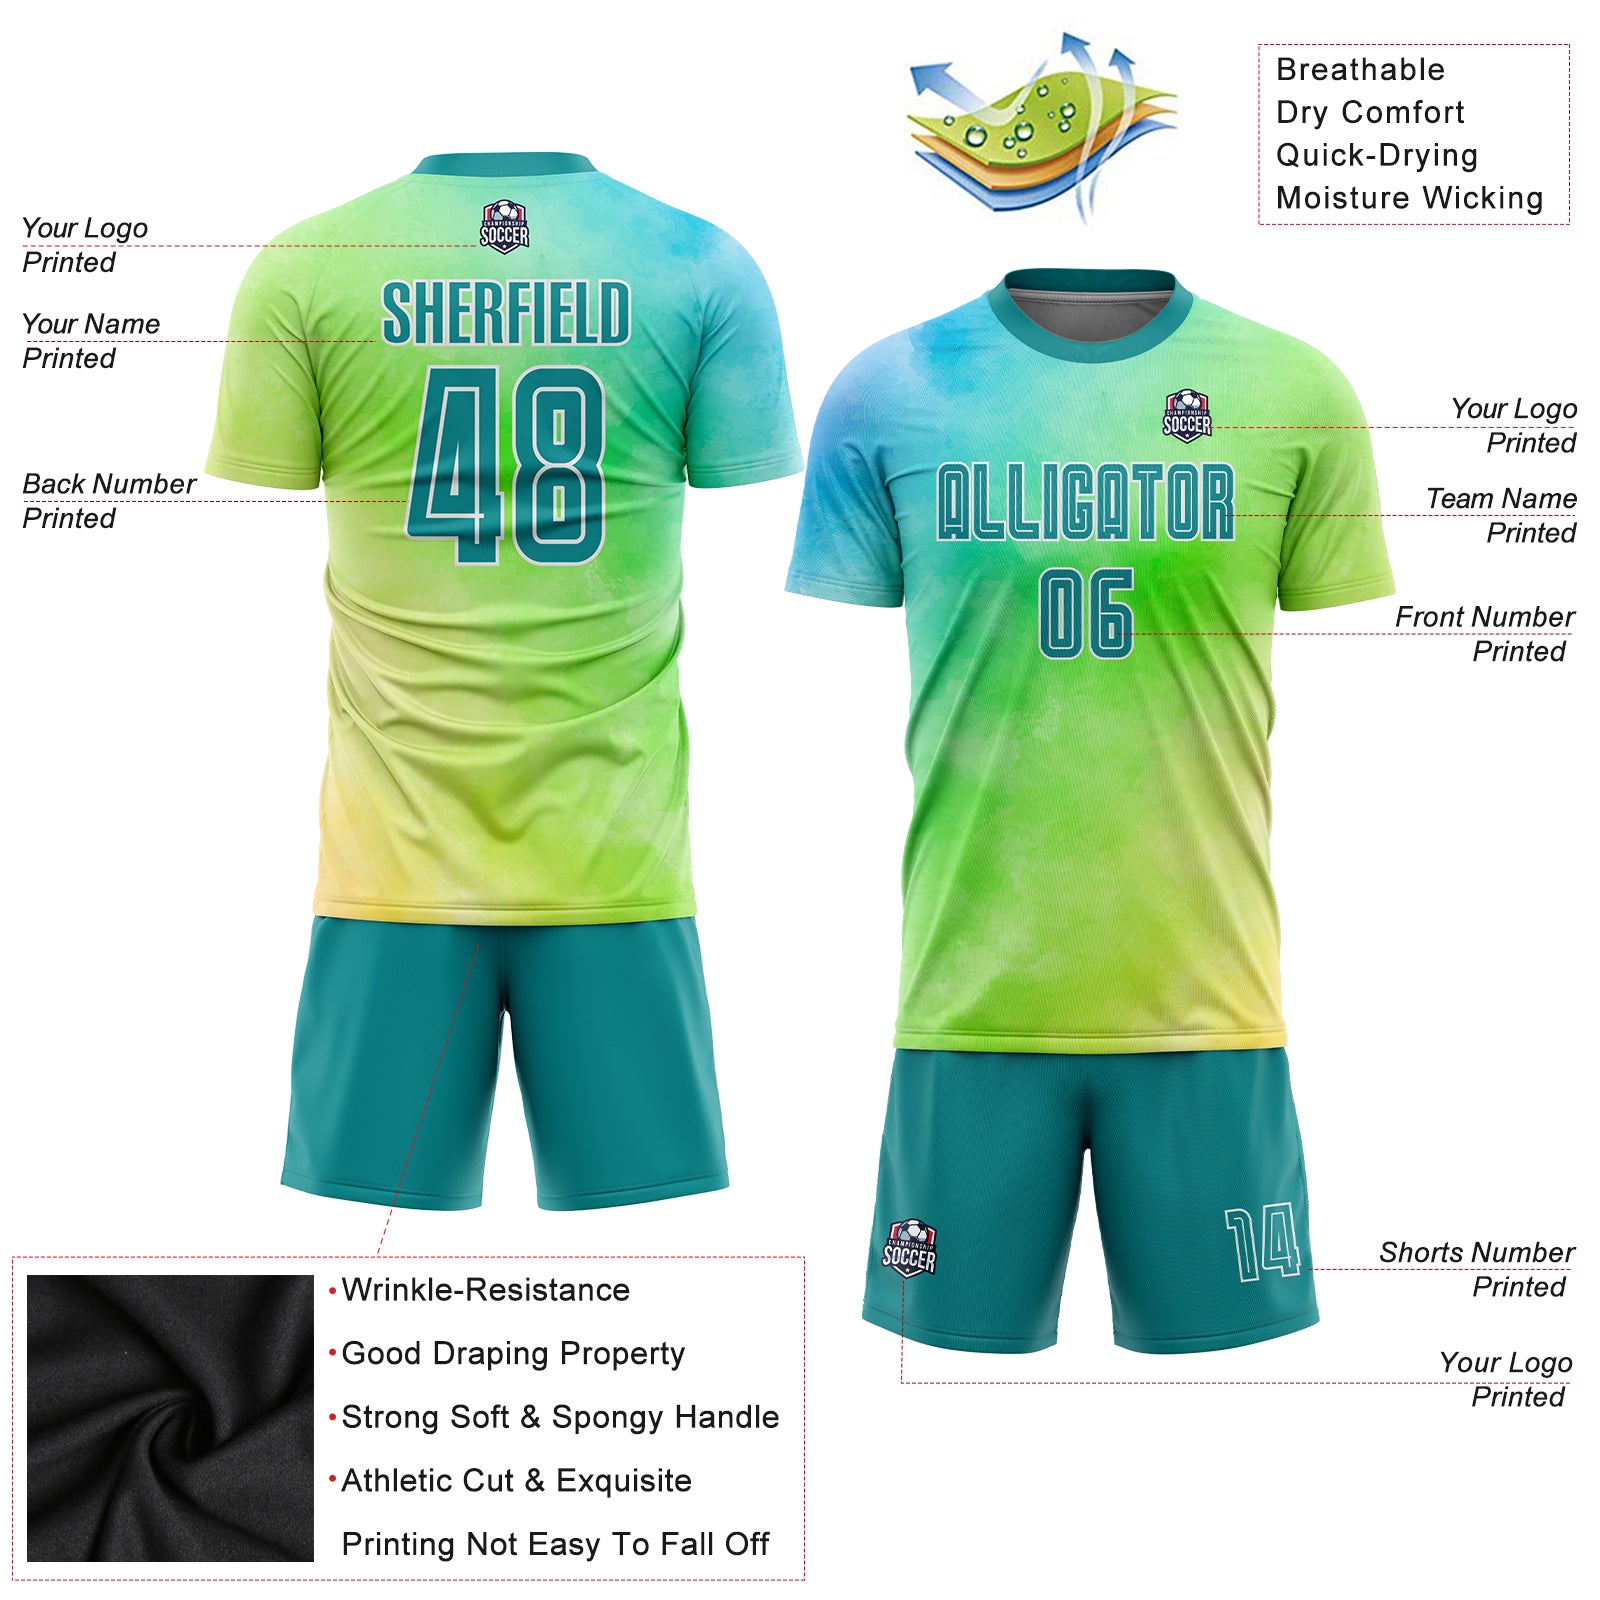 Custom Tie Dye Aqua-White Sublimation Soccer Uniform Jersey